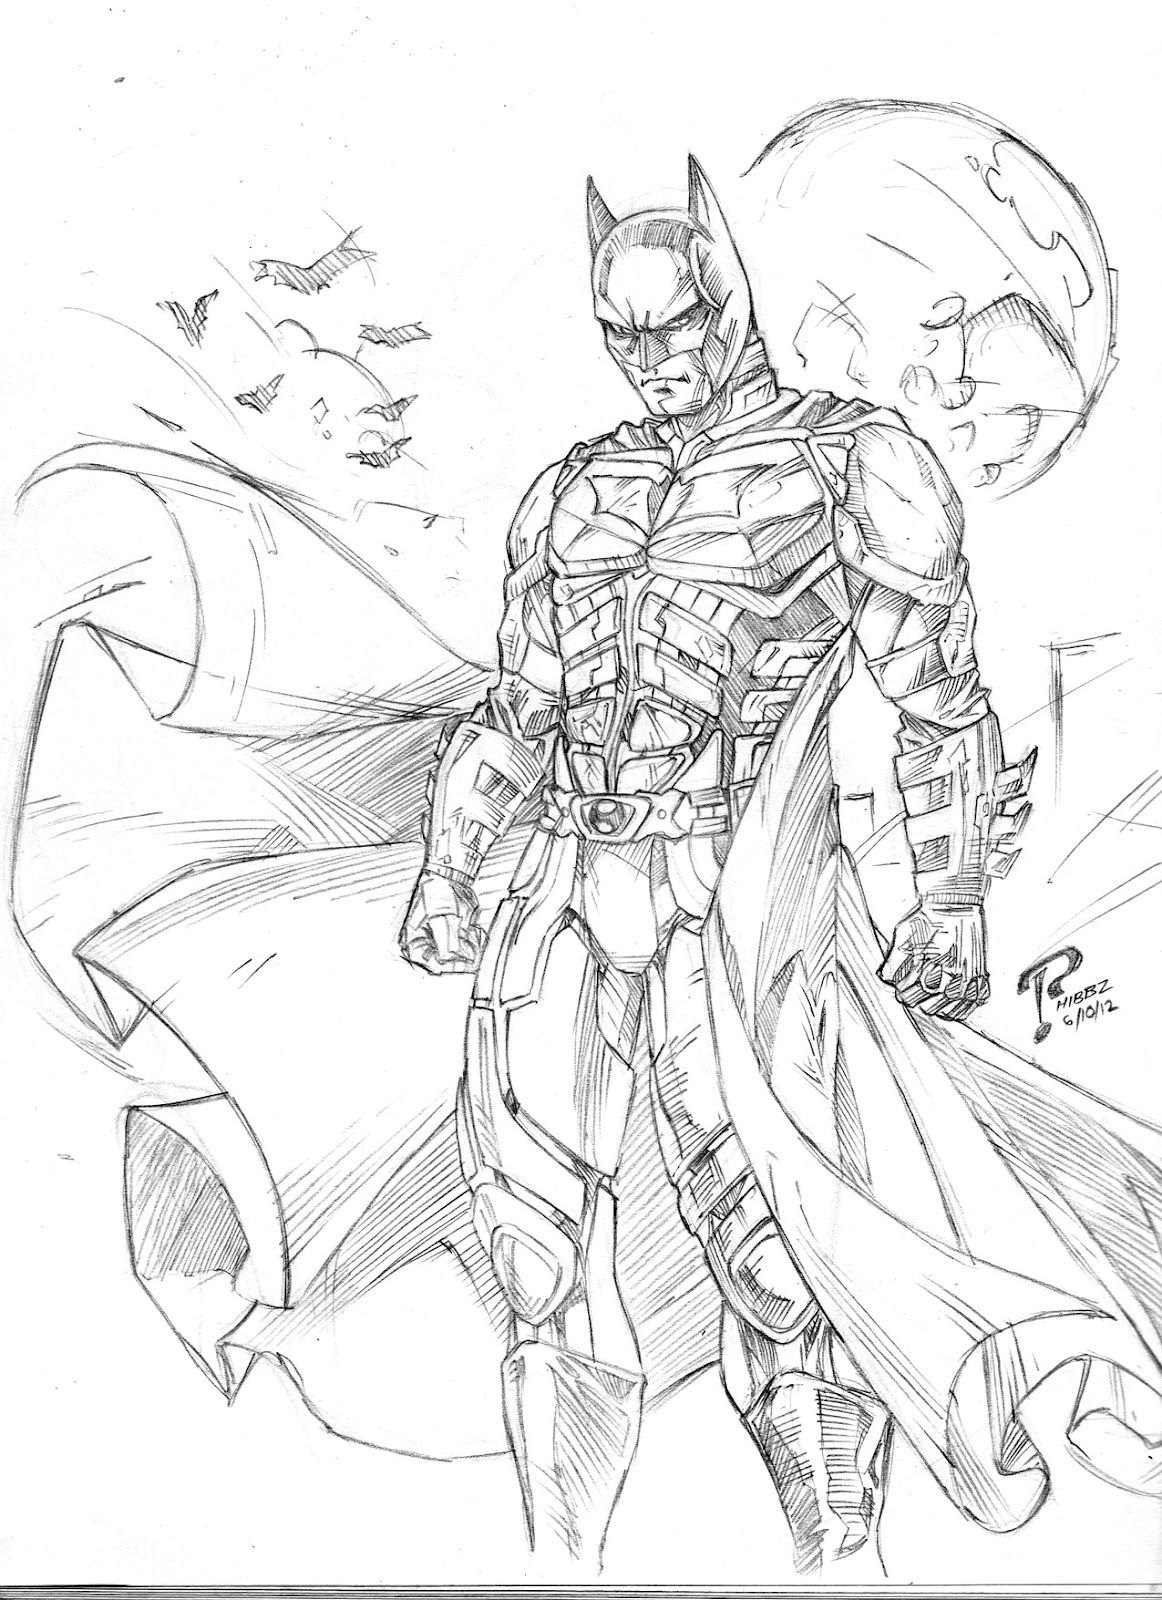 Dark knight coloring pages batman coloring pages batman art drawing superman coloring pages